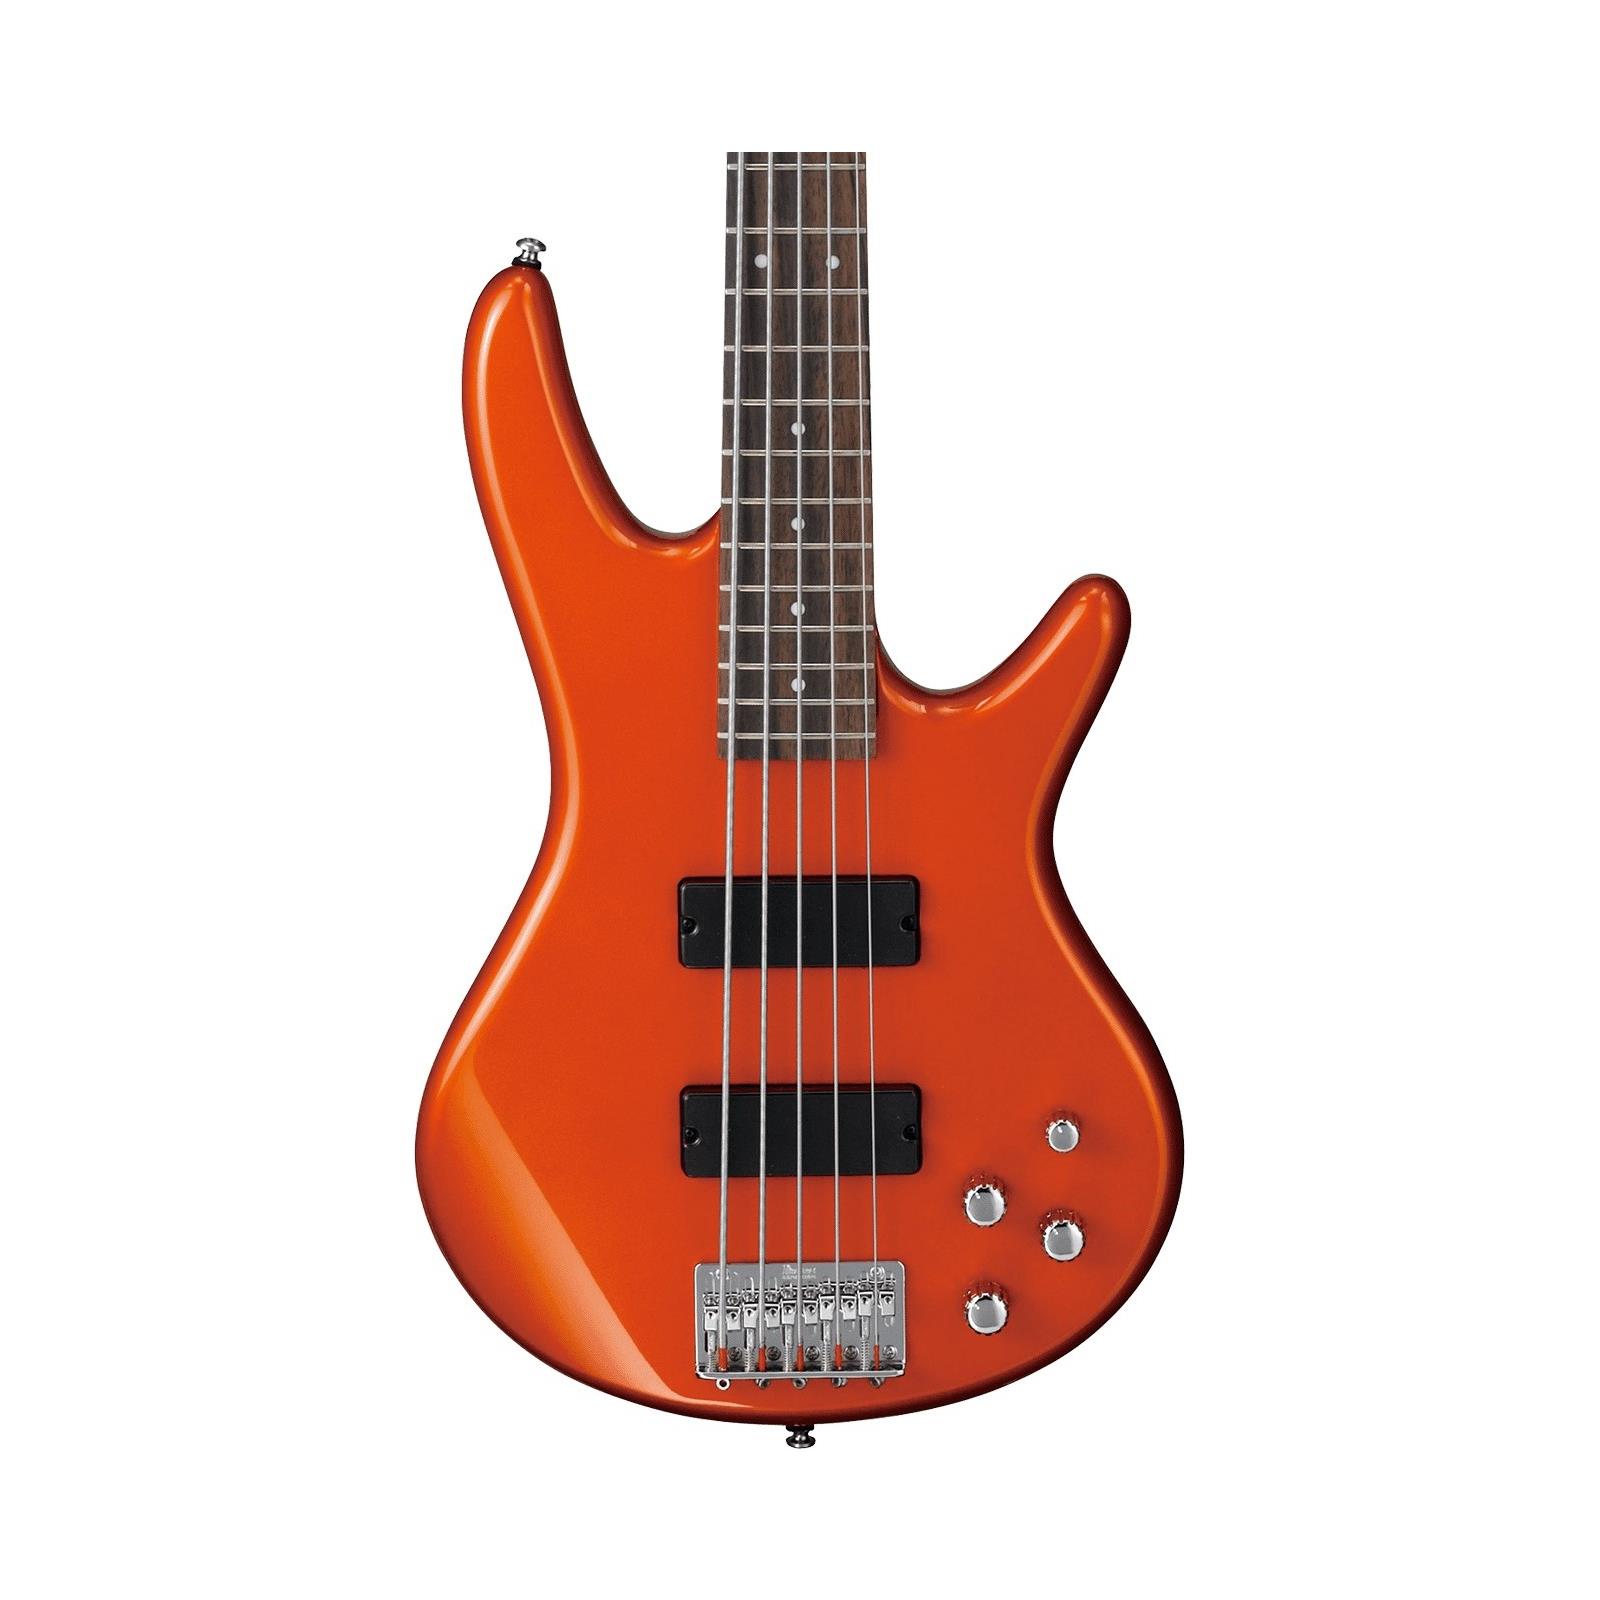 Ibanez Gio SR 5str Electric Bass - Roadster Orange Metallic